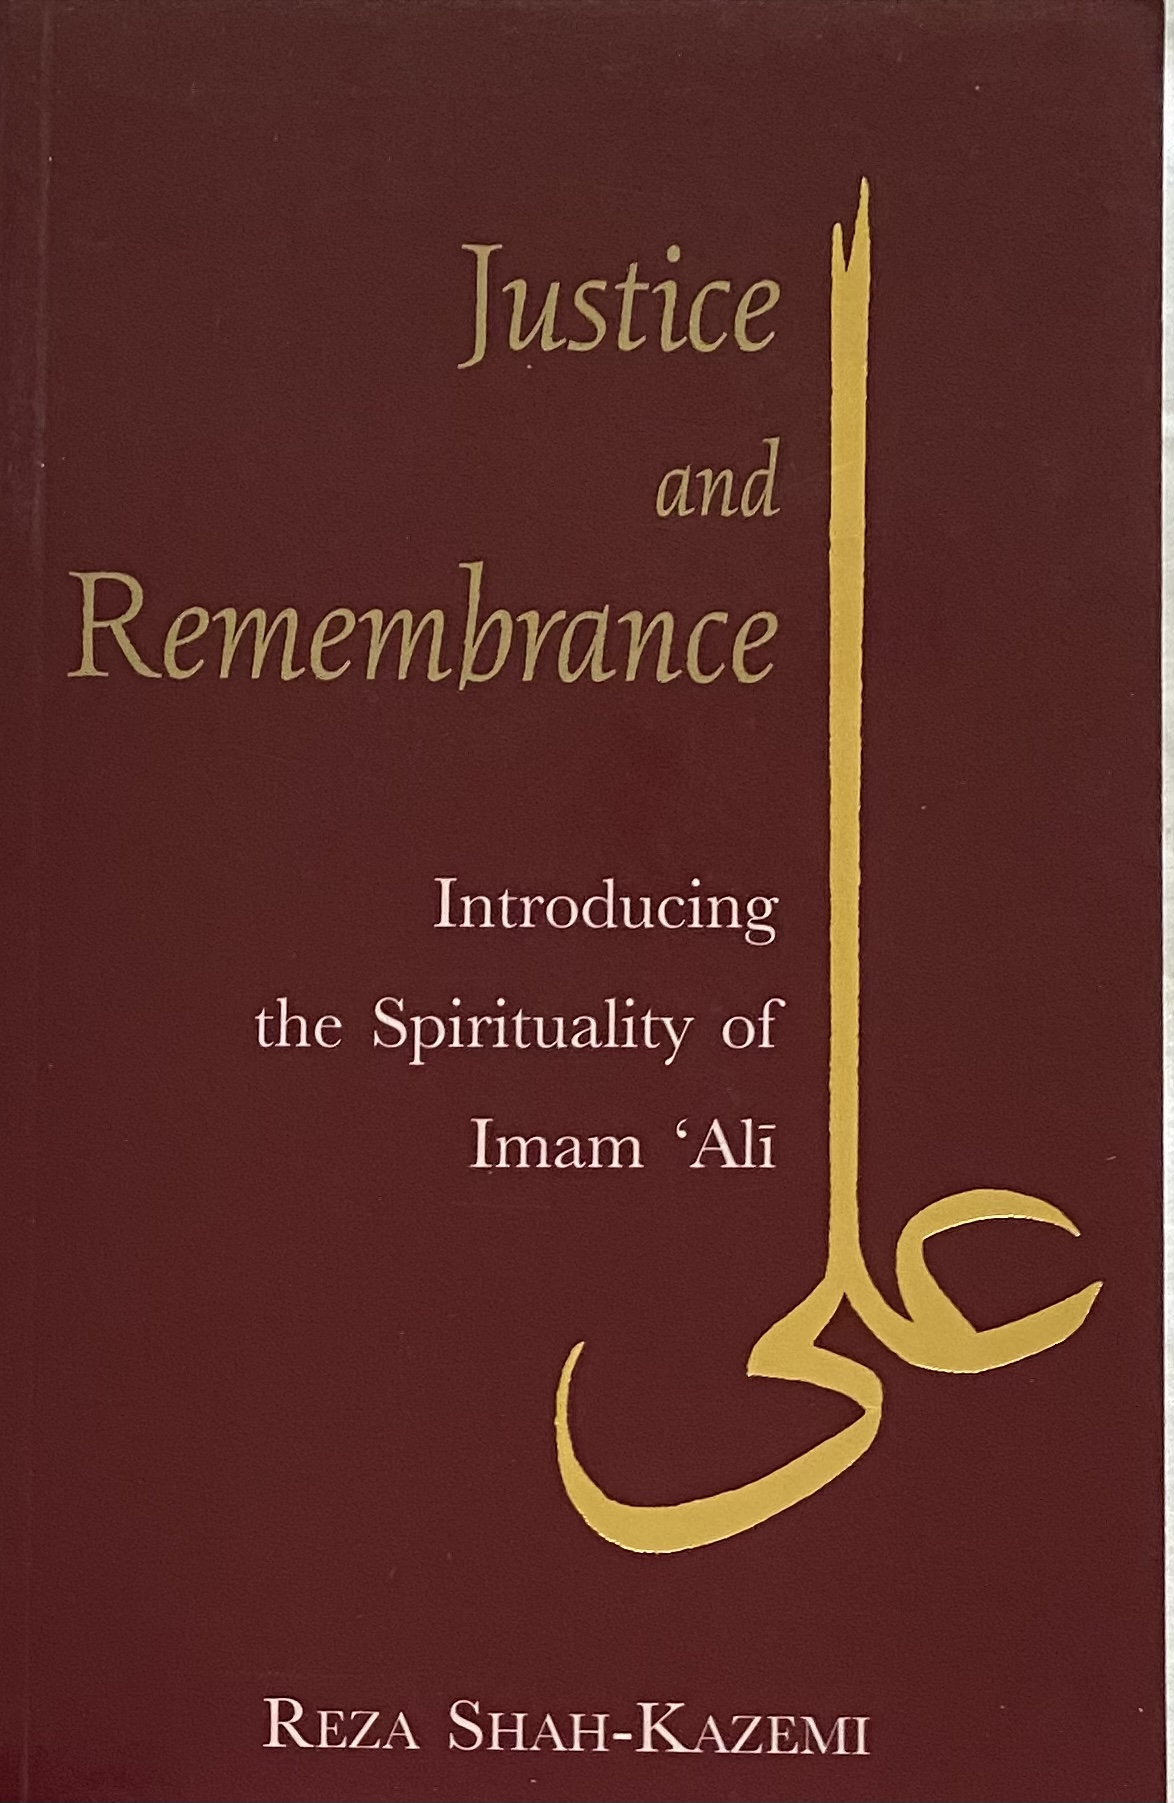 Justice & Remembrance Introducing the Spirituality of Imam 'Ali - Reza Shah-Kazemi